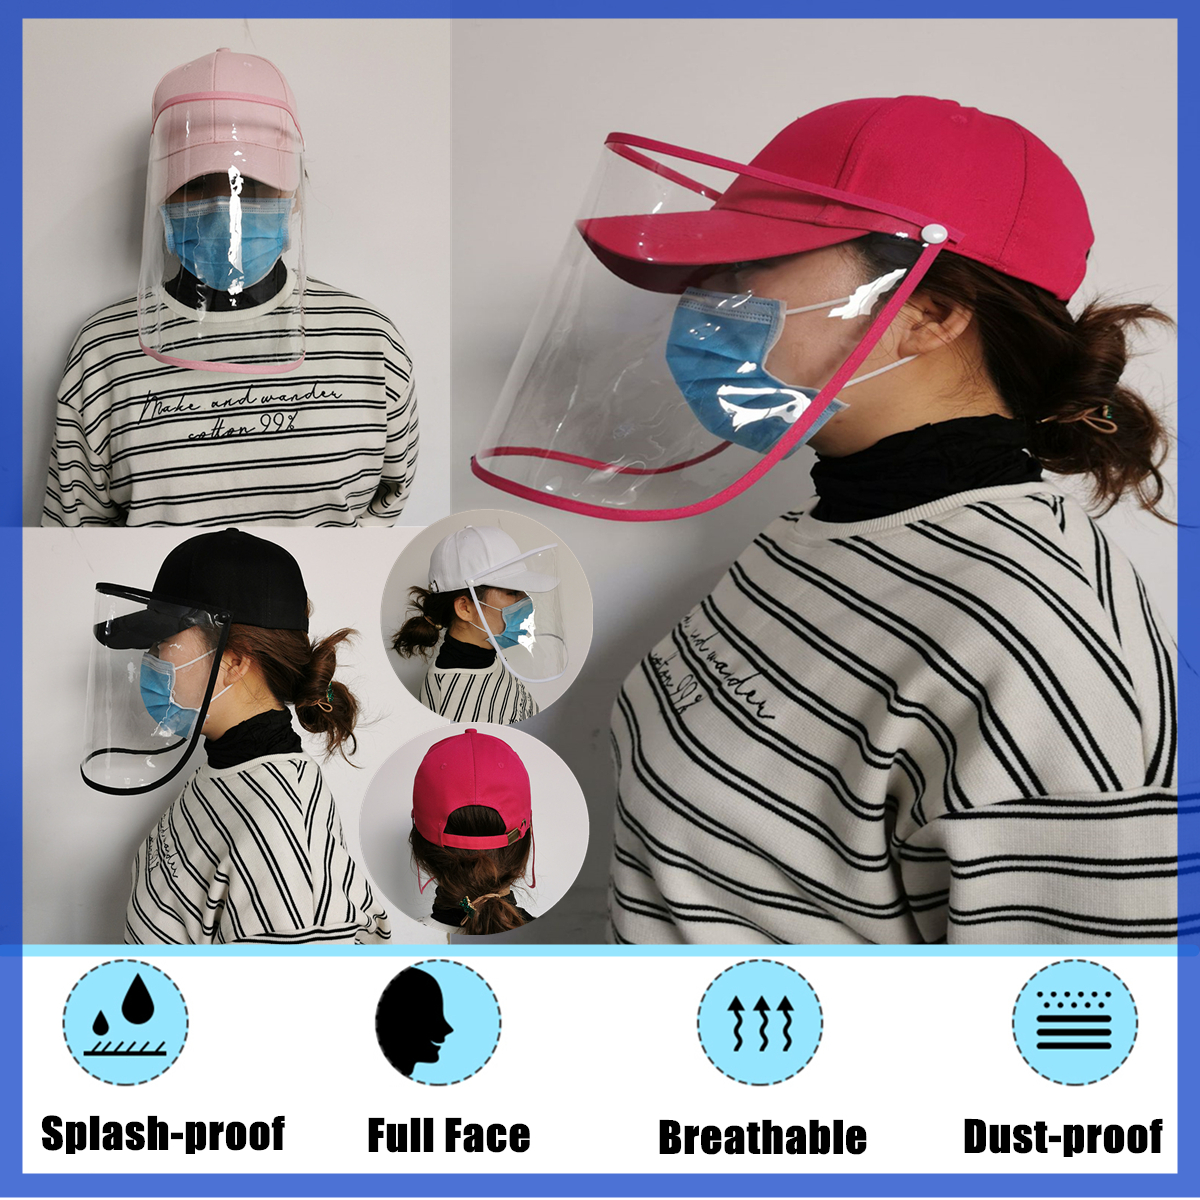 Removable-Protective-Cap-Full-Face-Mask-Splash-proof-Dustproof-Protector-Baseball-Hat-1654797-2